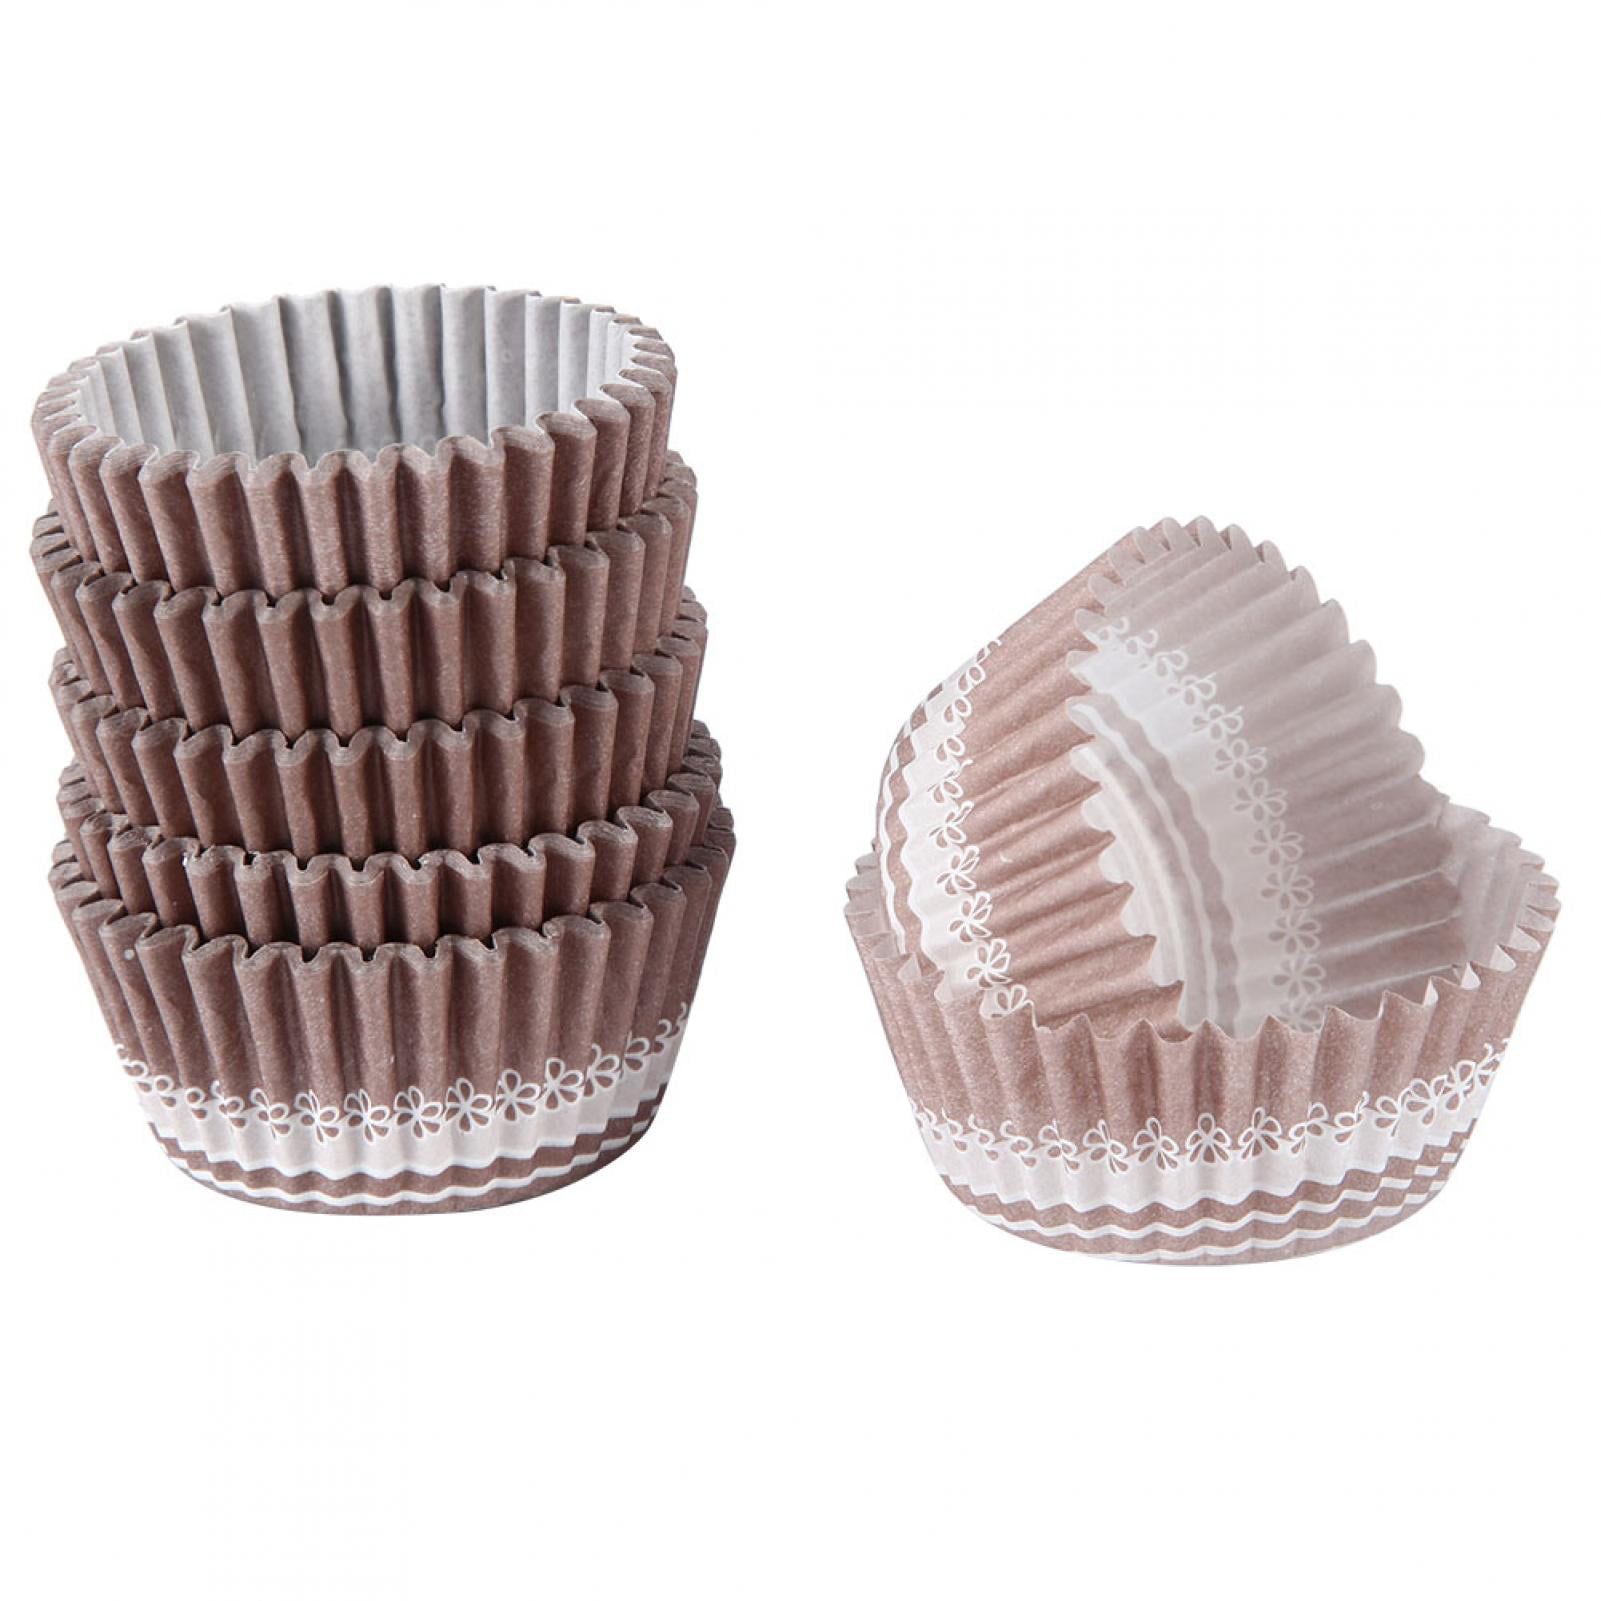 Novacart Brown Disposable Paper Baking Cup 2-1/4" Bottom x 1-7/8" High 